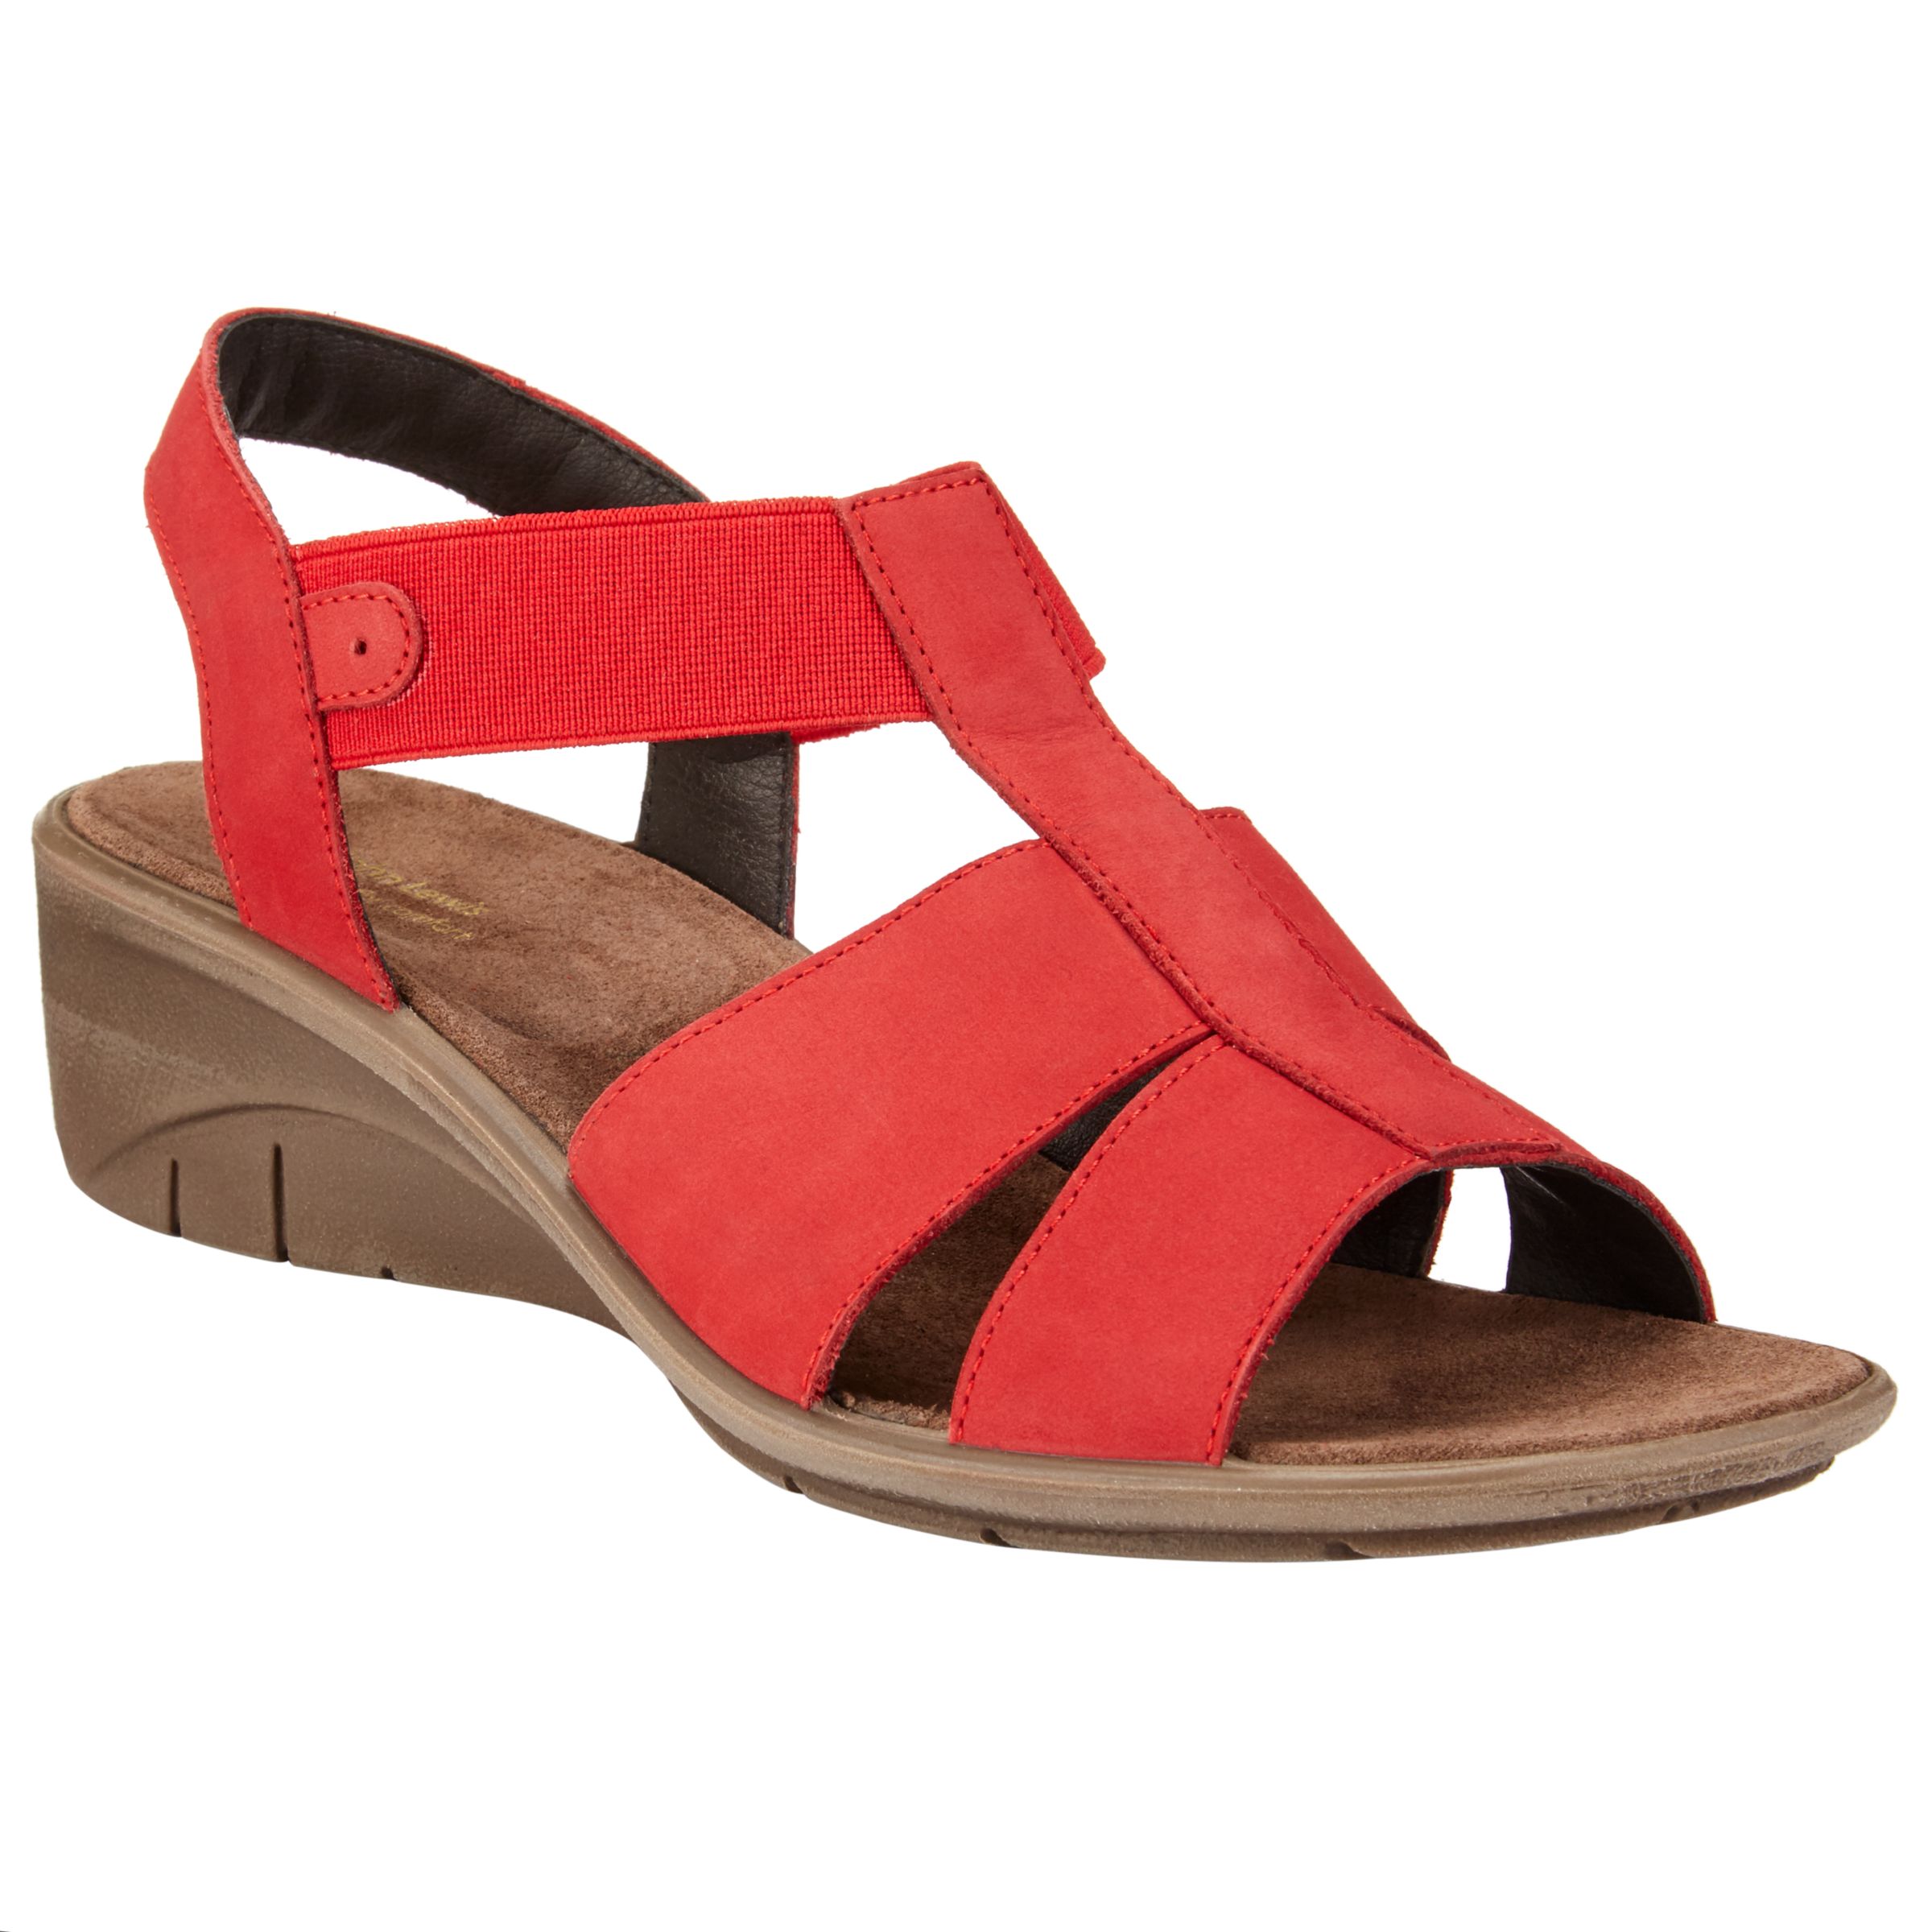 John Lewis Designed for Comfort Kathy Wedge Heeled Sandals, Red